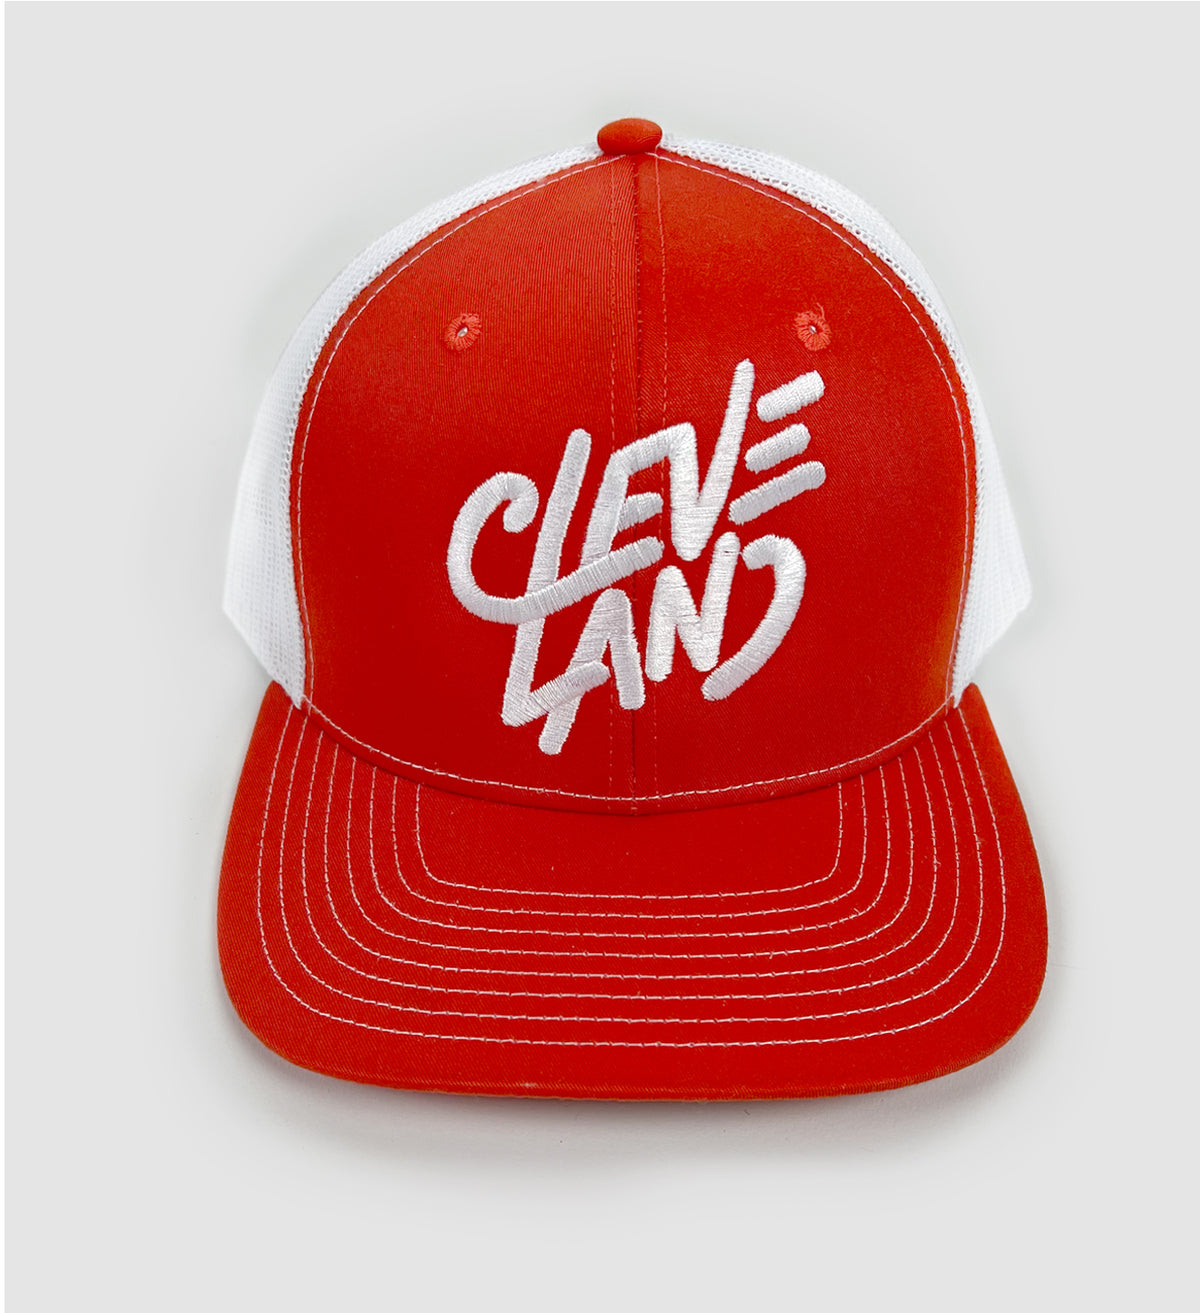 Orange Cleveland Sketch Mesh Hat